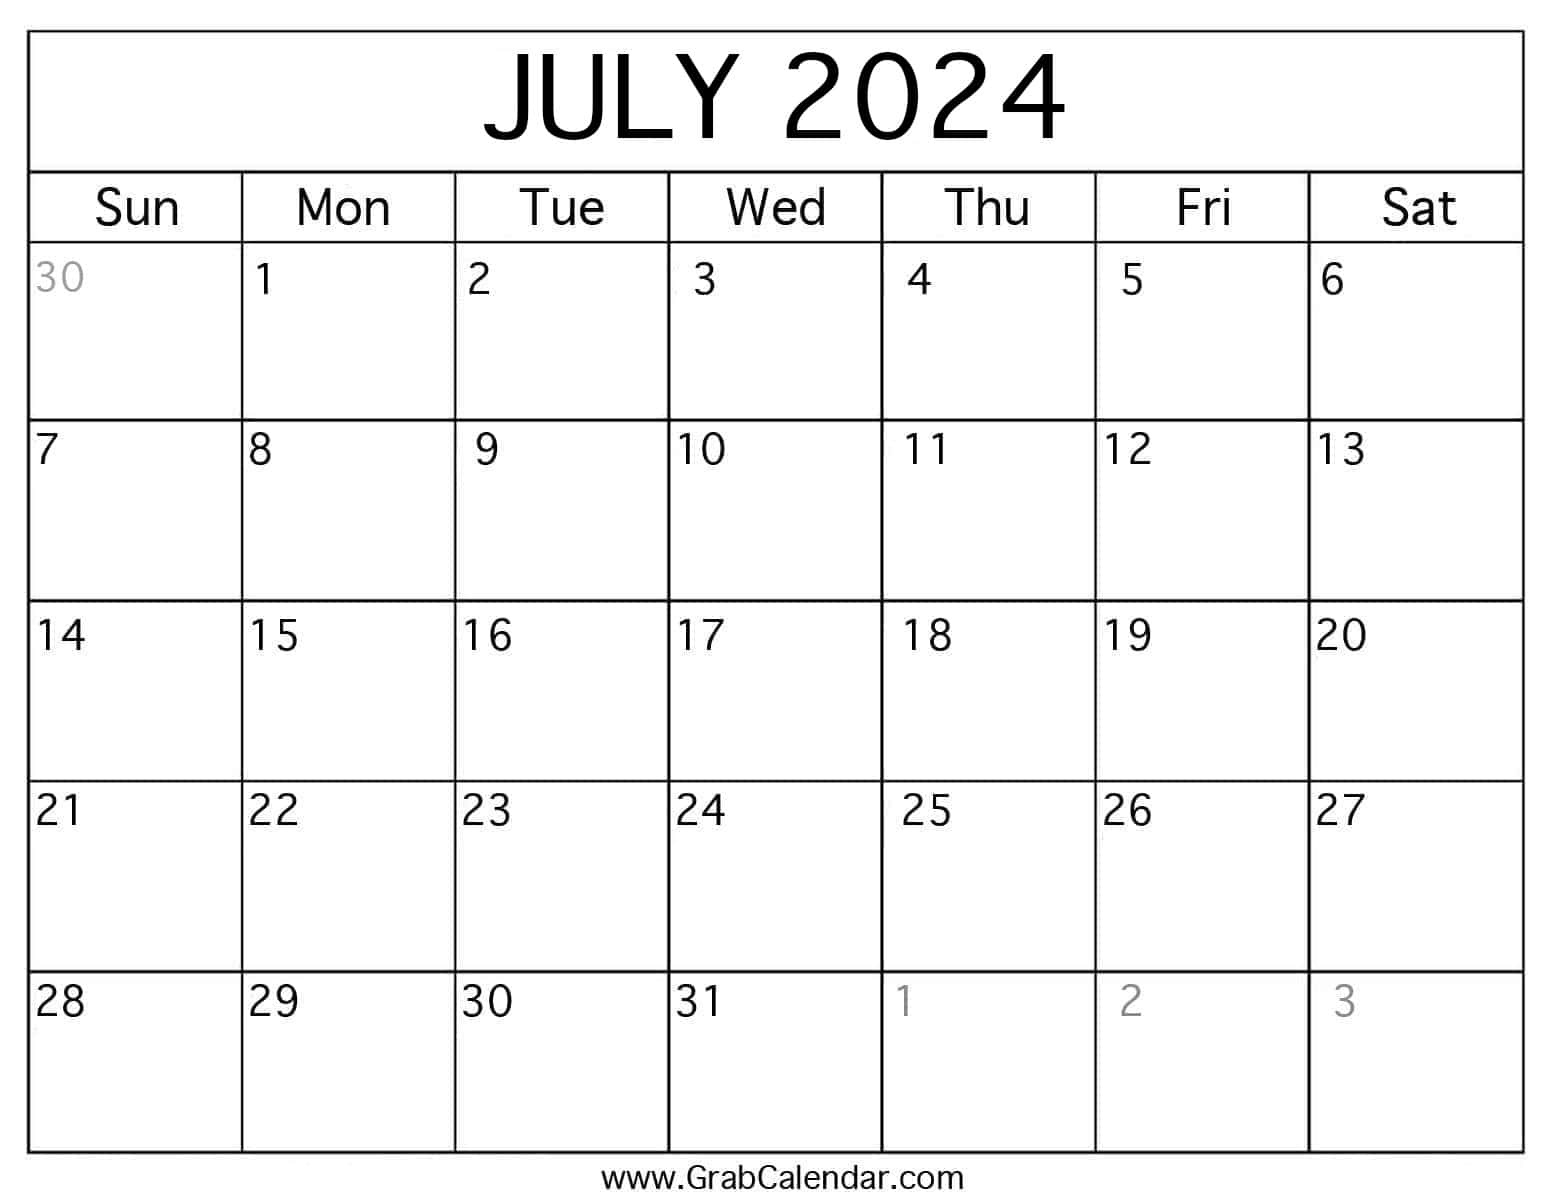 Printable July 2024 Calendar intended for Month July 2024 Calendar